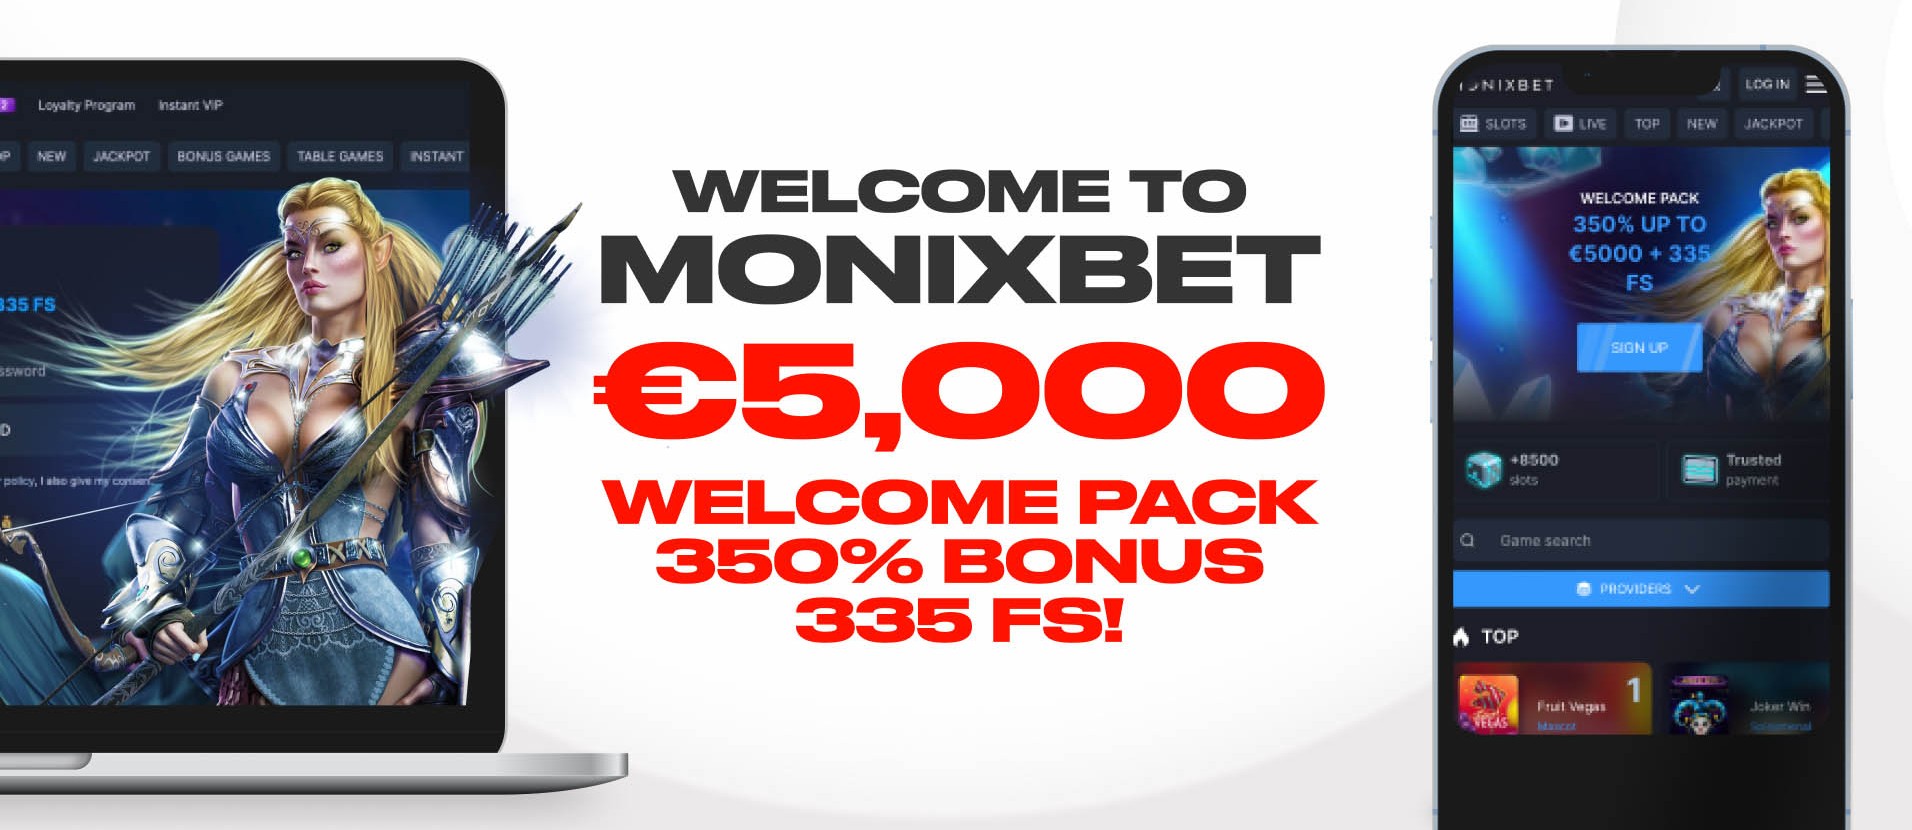 Meet Monixbet: €5K welcome pack for Tier-1 geos